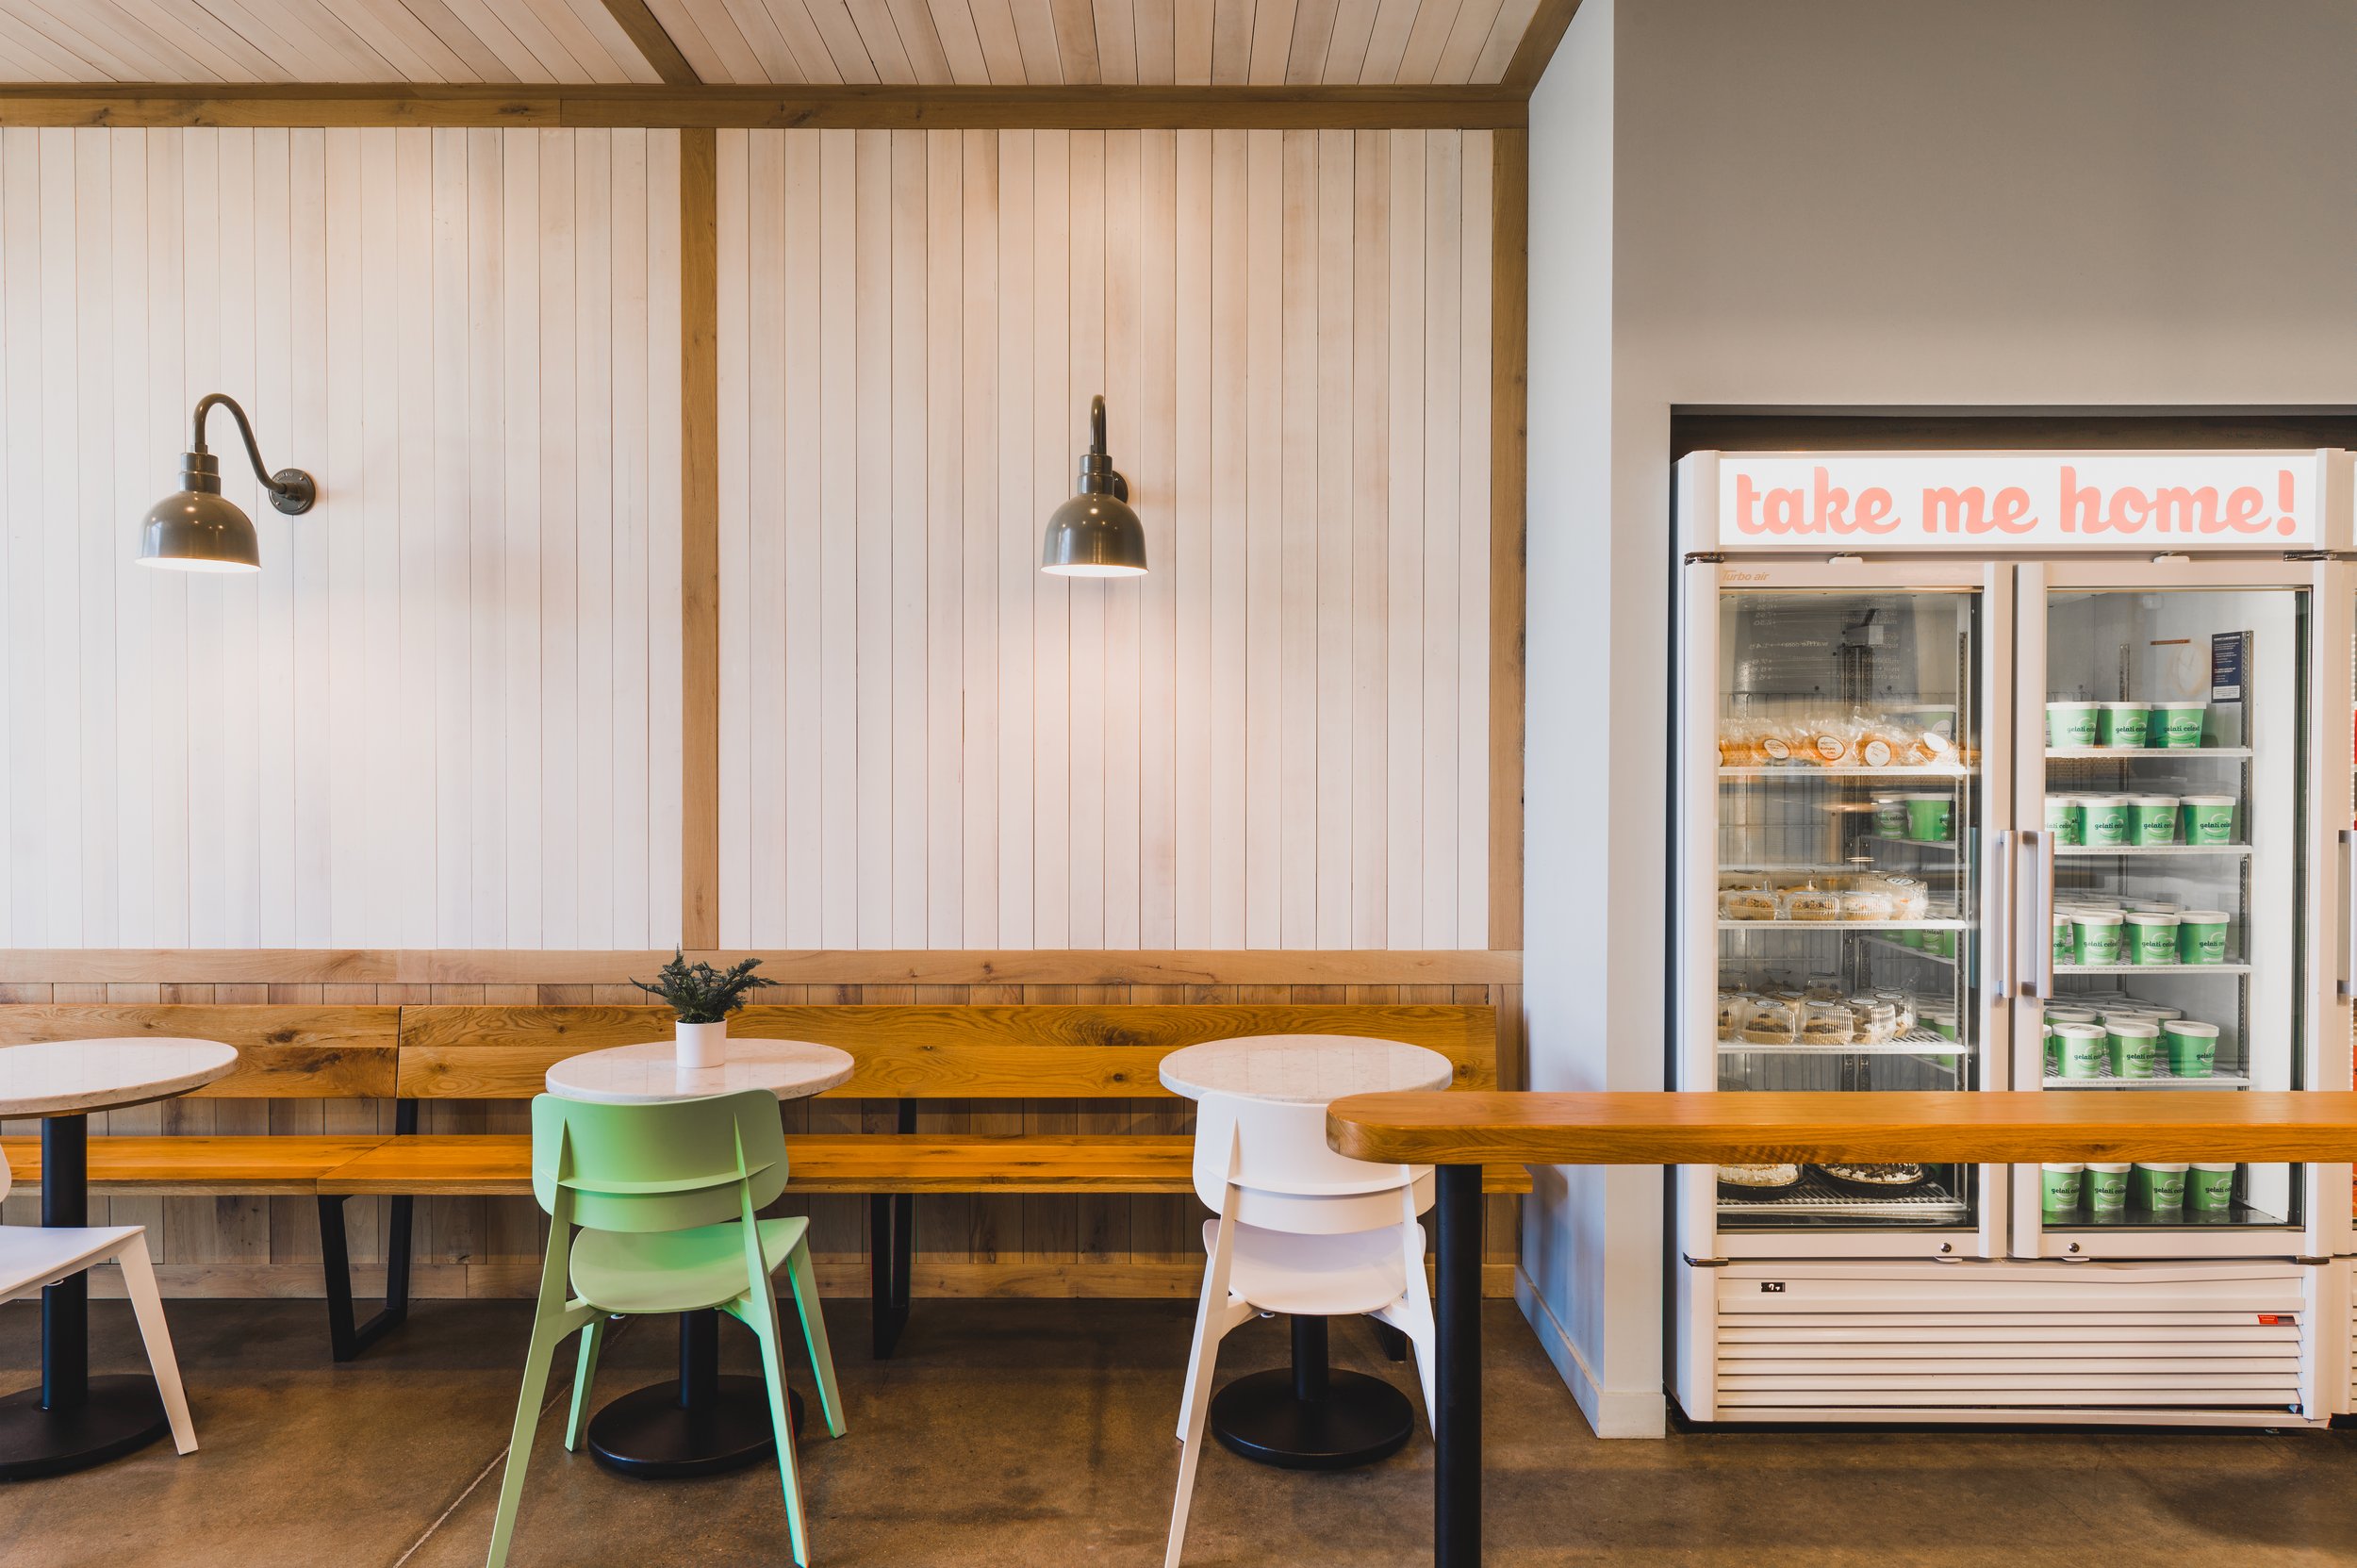 Designing for Growth – Gelati Celesti's Newest Ice Cream Shop Interior  Design Reveal — Campfire & Co